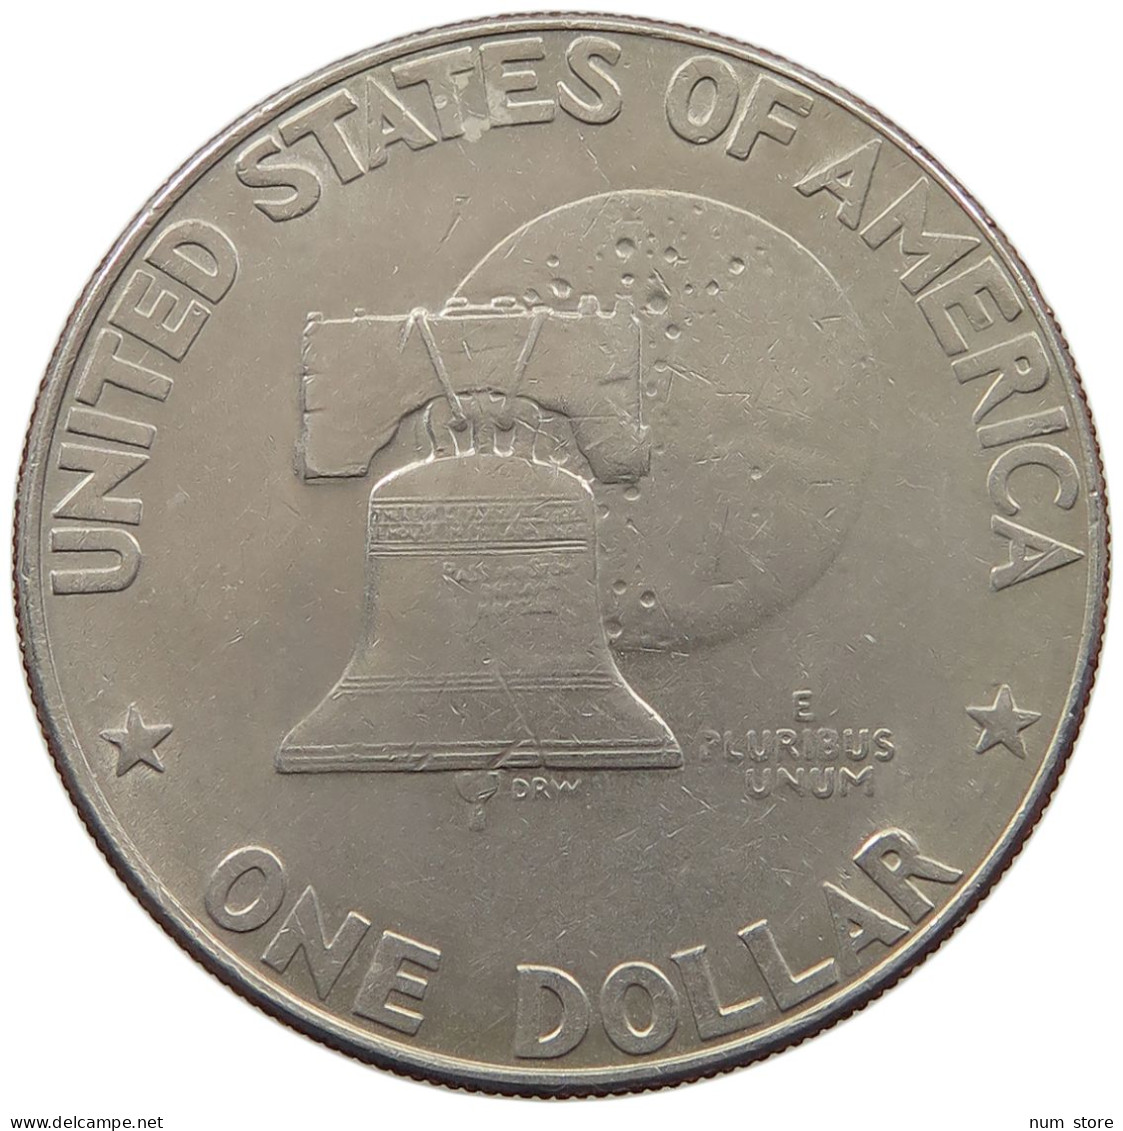 UNITED STATES OF AMERICA DOLLAR 1976 D EISENHOWER #c077 0193 - 1971-1978: Eisenhower